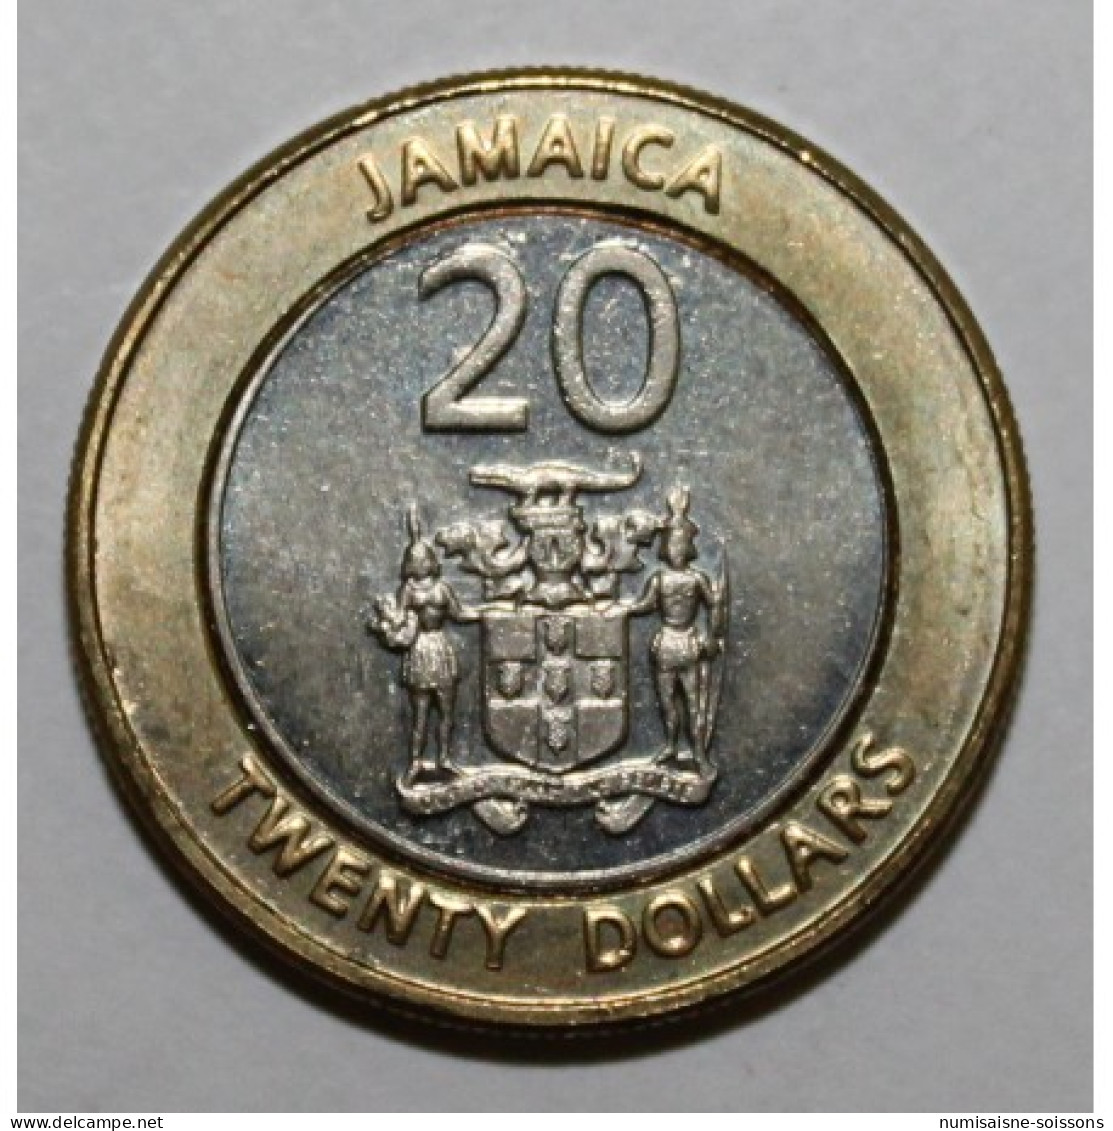 JAMAÏQUE - KM 182 - 20 DOLLARS 2000 - MARCUS GARVEY - SUP - Jamaica